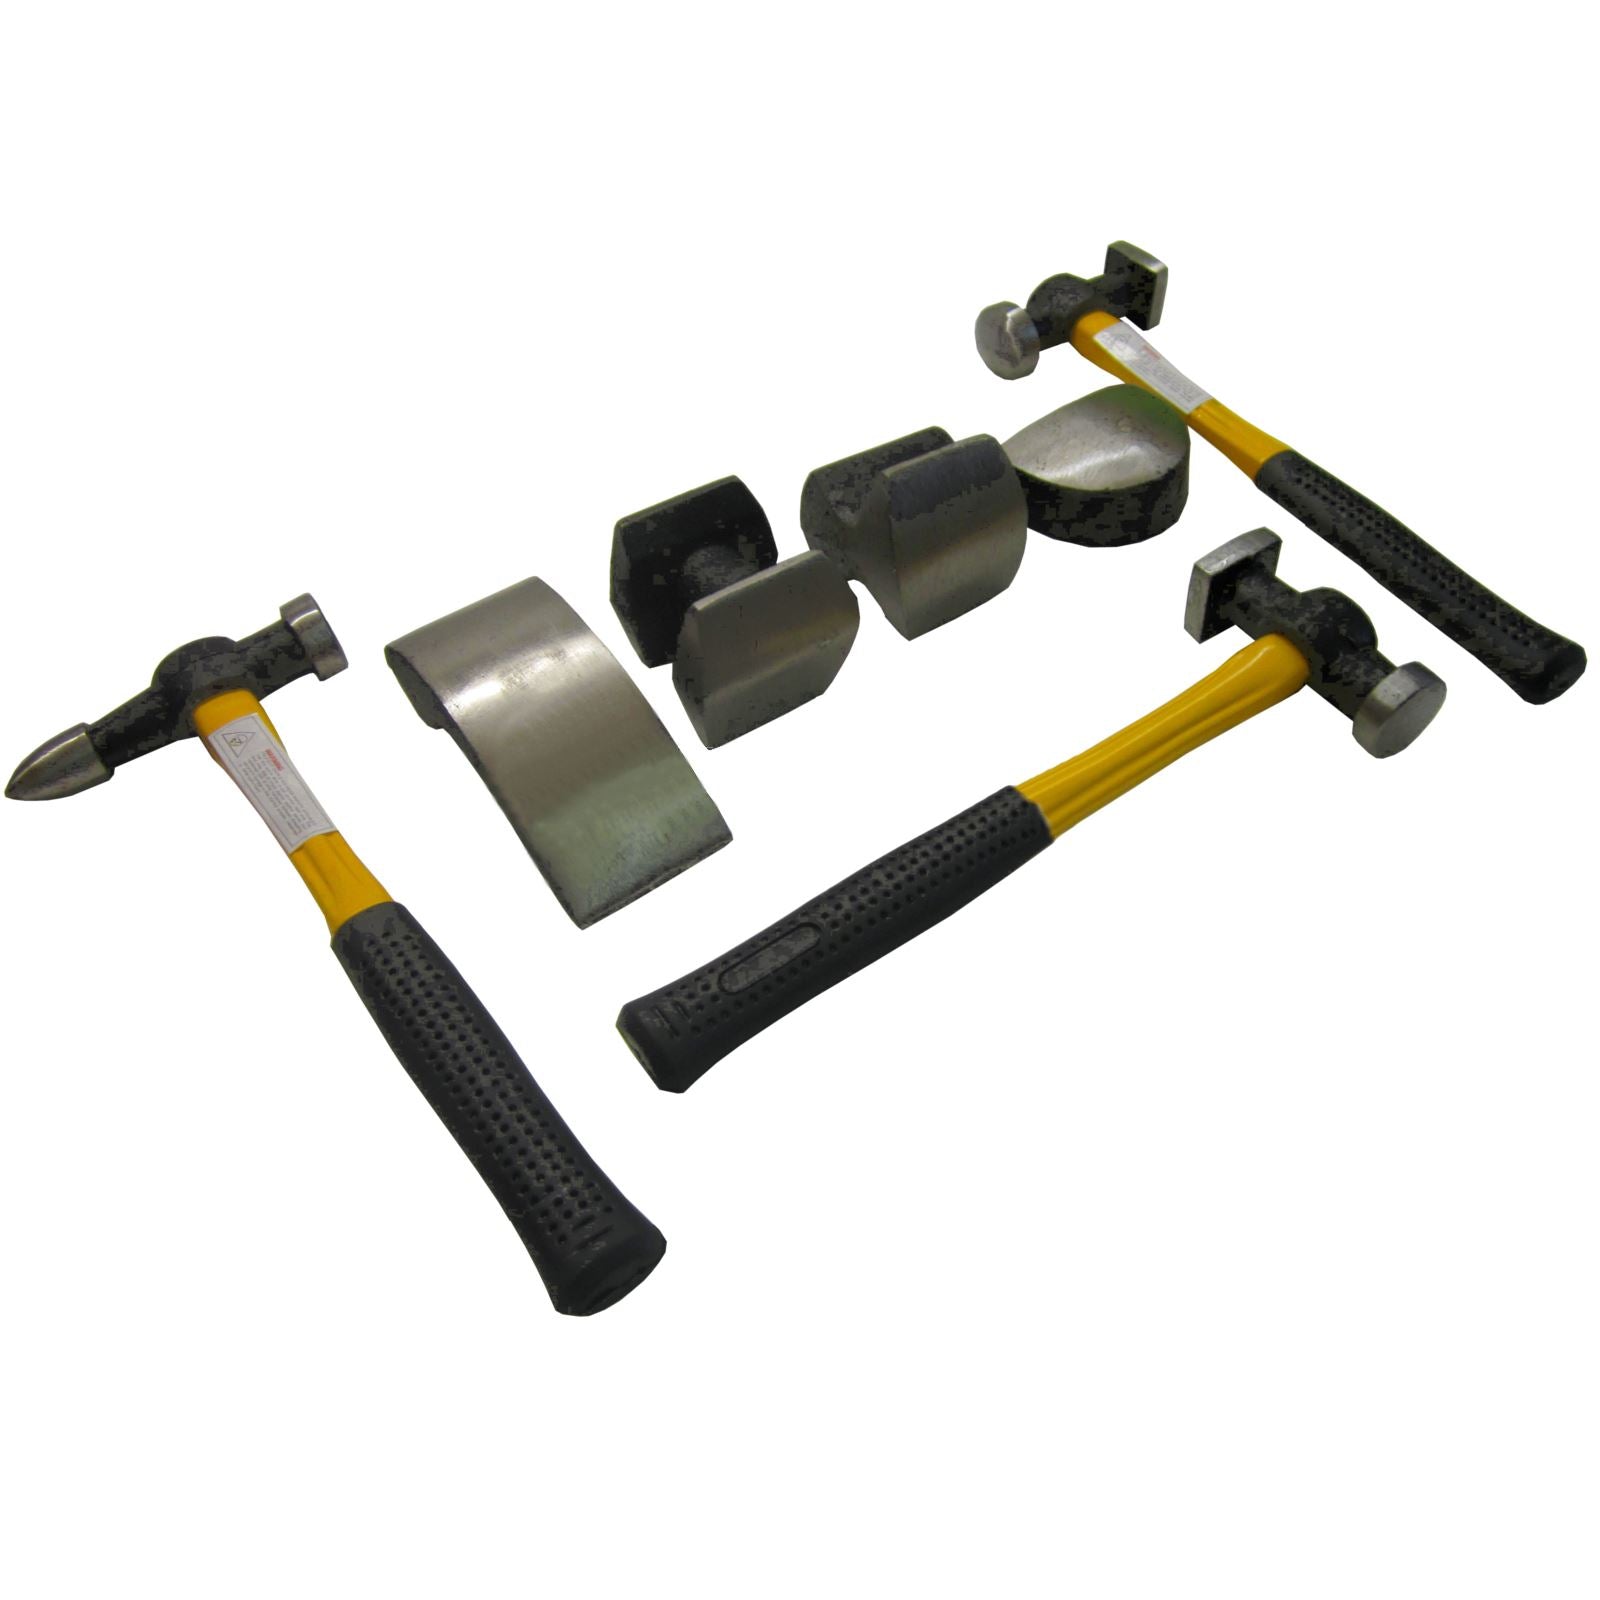 Panel Beating Hammers & Dollies / Body Repair Kit with Fibreglass Handles TE101